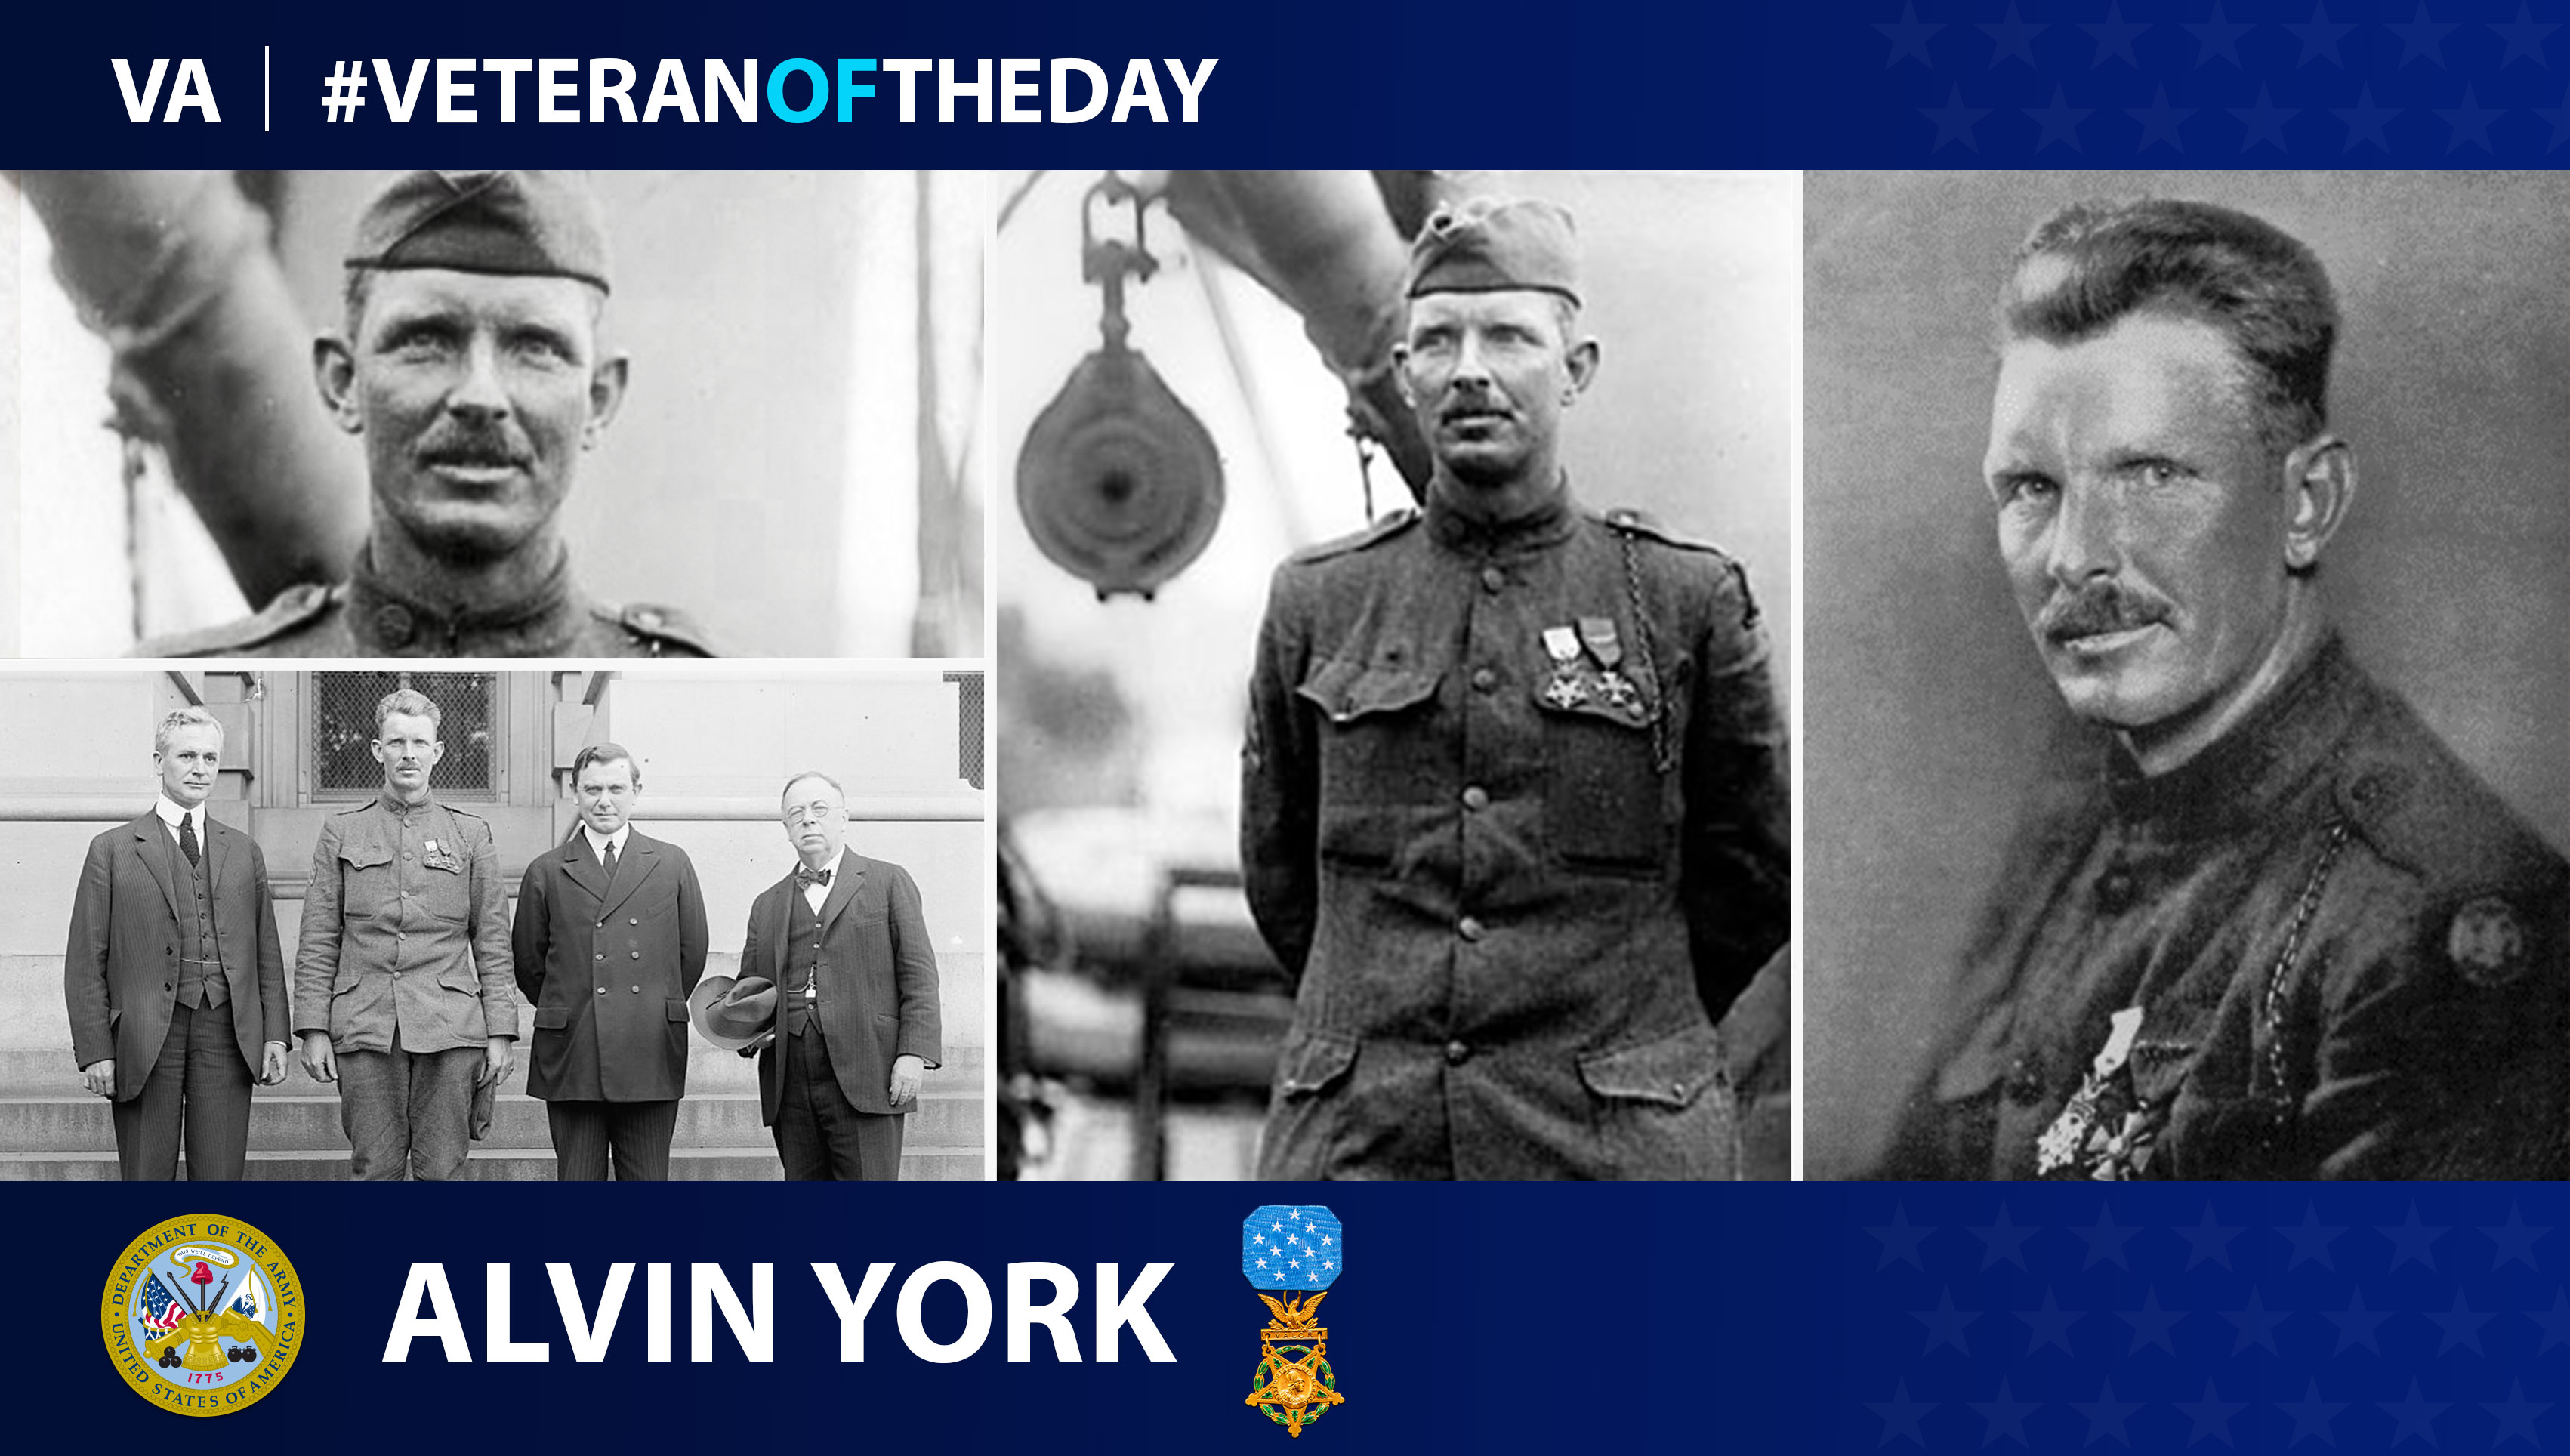 Army Veteran Alvin Cullum York is today's Veteran of the Day.